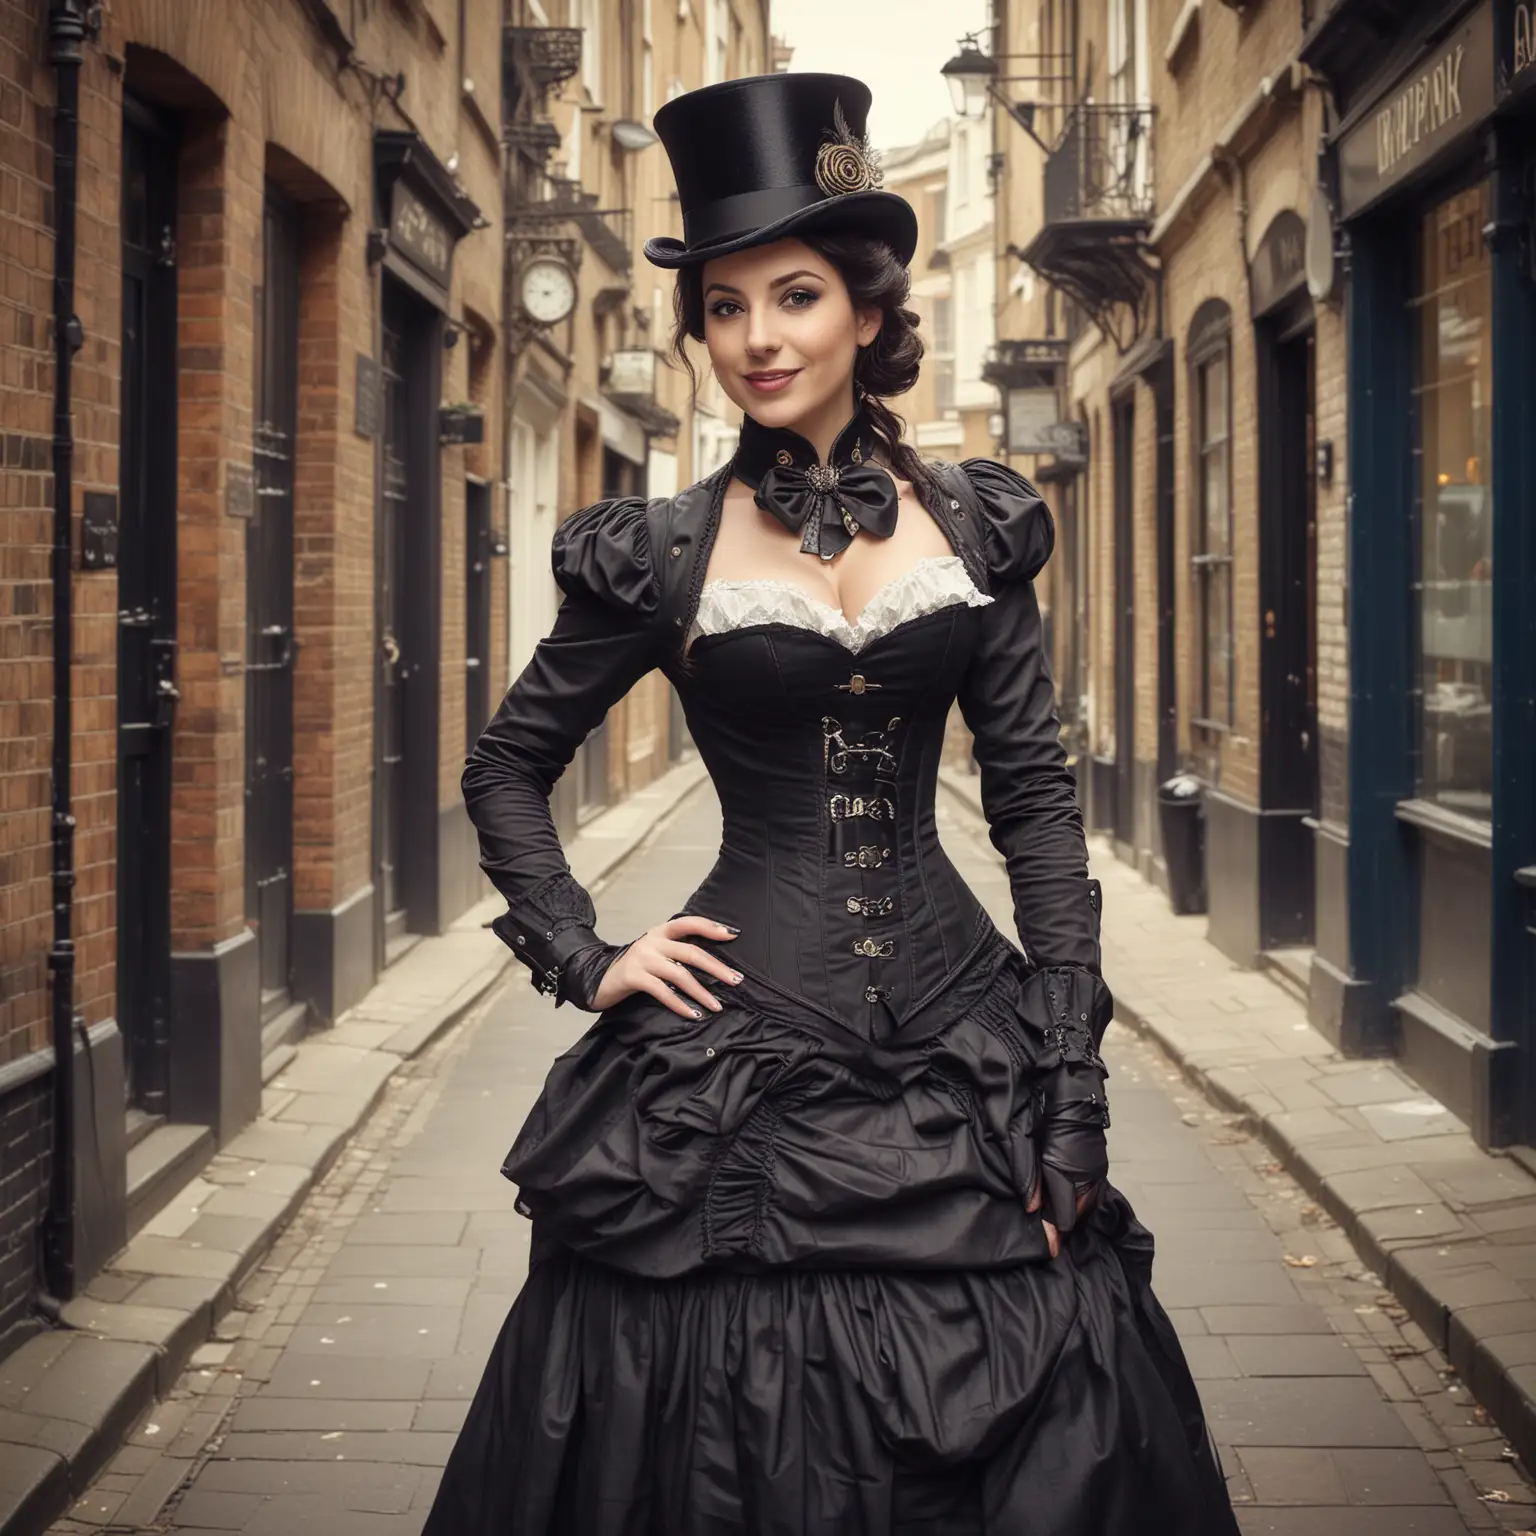 Confident Steampunk Victorian Gentlewoman in London Streets